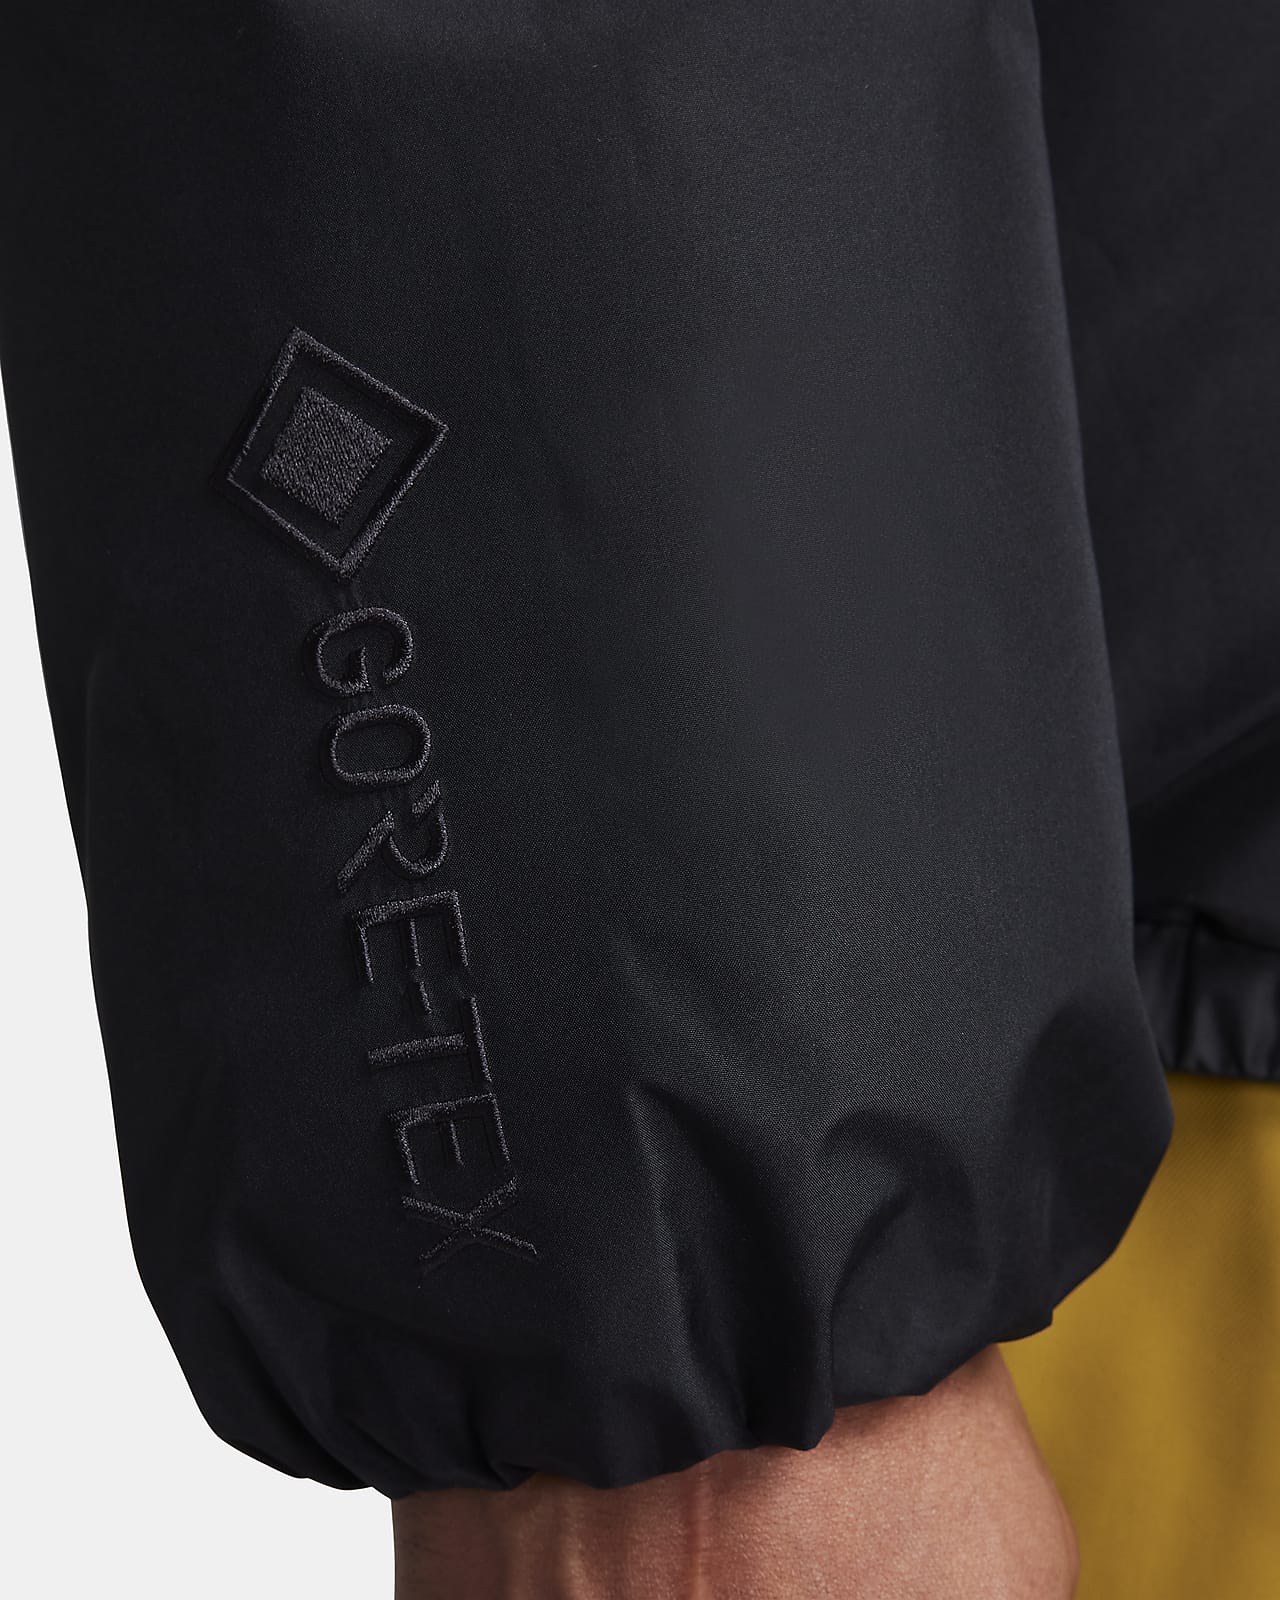 Nike Sportswear GORE-TEX Men's Loose Storm-FIT ADV Hooded Waterproof  Jacket.